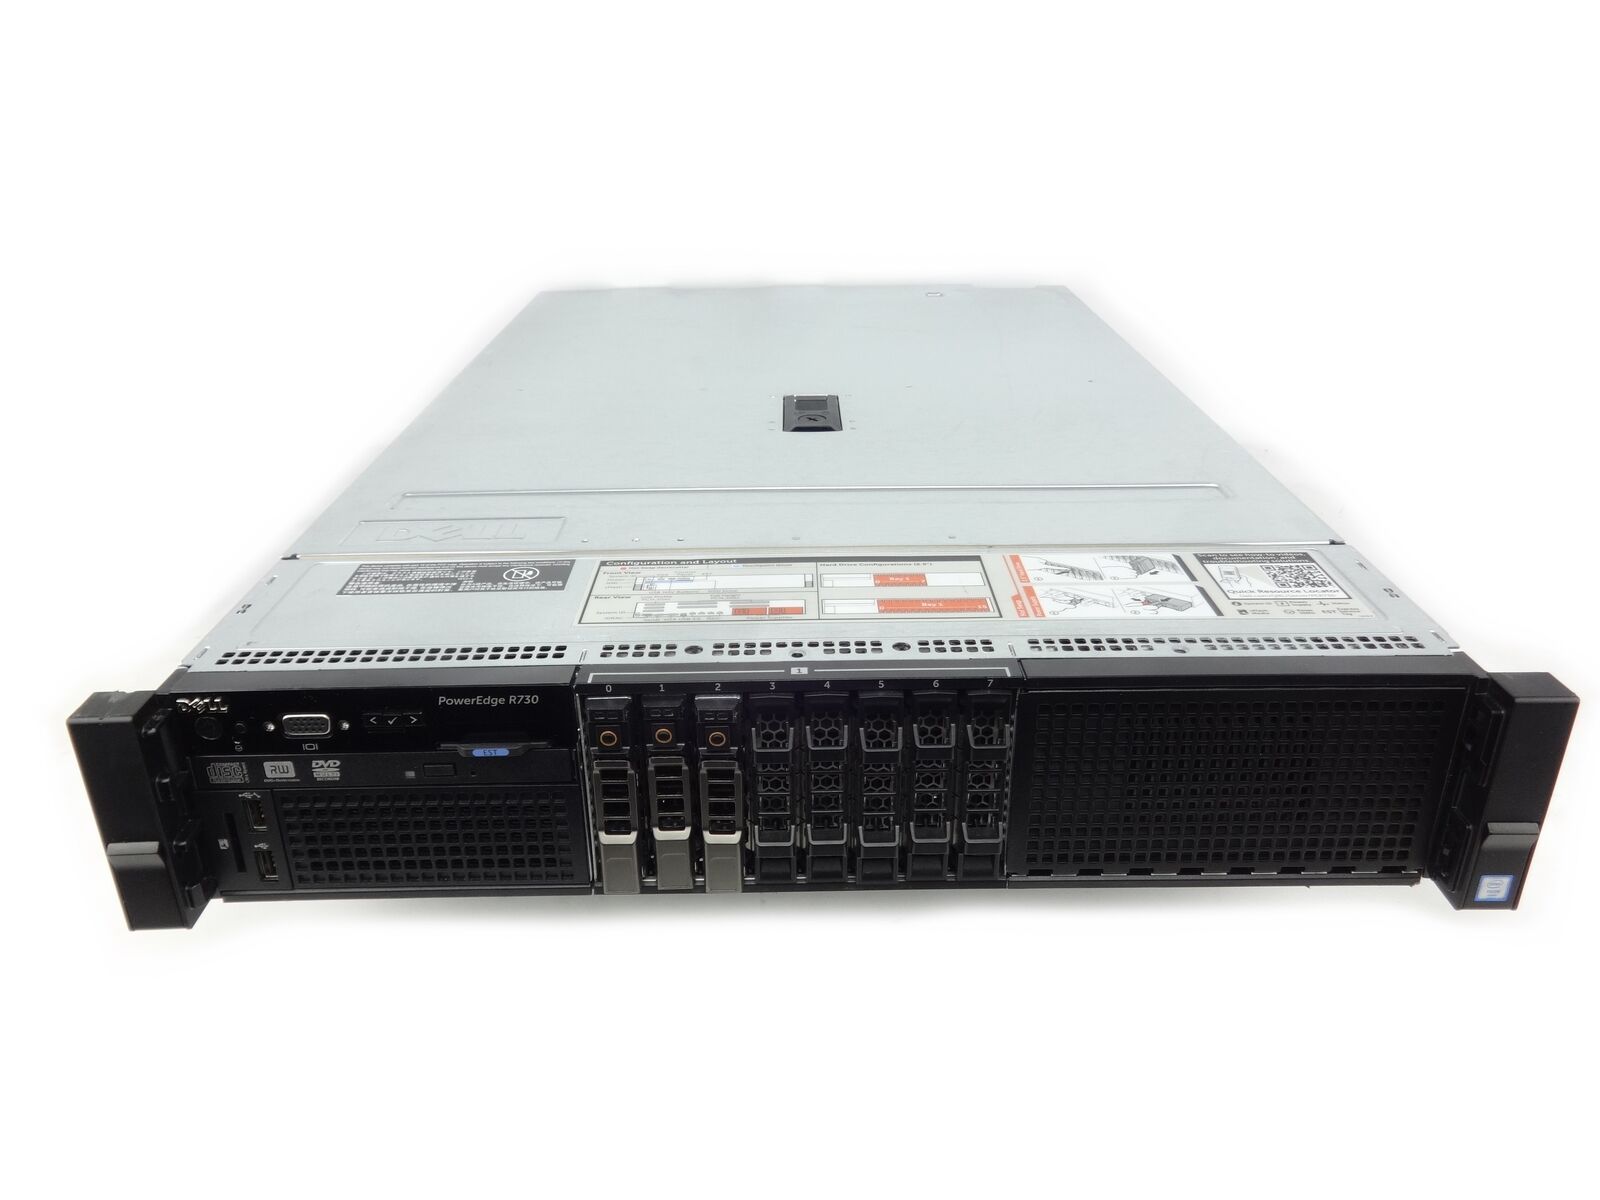 Dell Poweredge R730 Server w/H330 Select Processor, RAM, Hard Drives, Rail kit